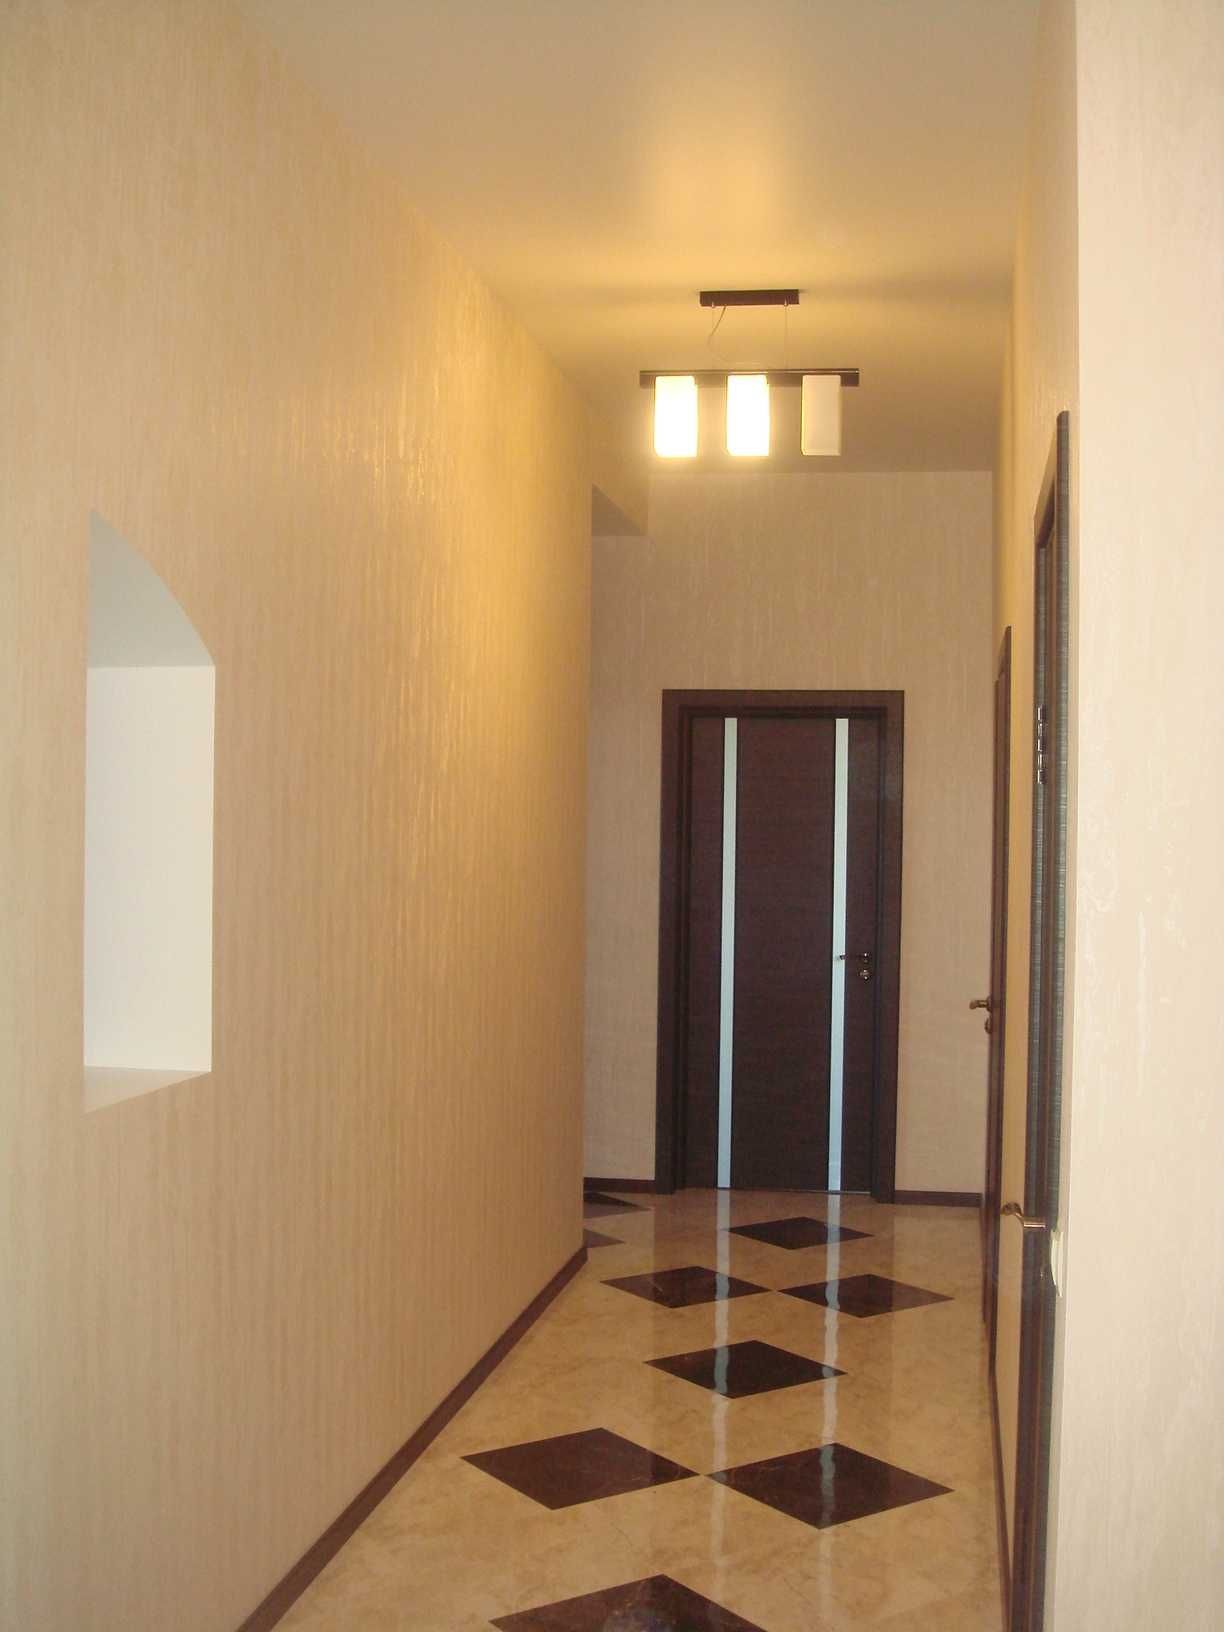 Аренда 3 комнатной квартиры 116 кв.м. на Оболоне,ЖК Оазис, с панорамой